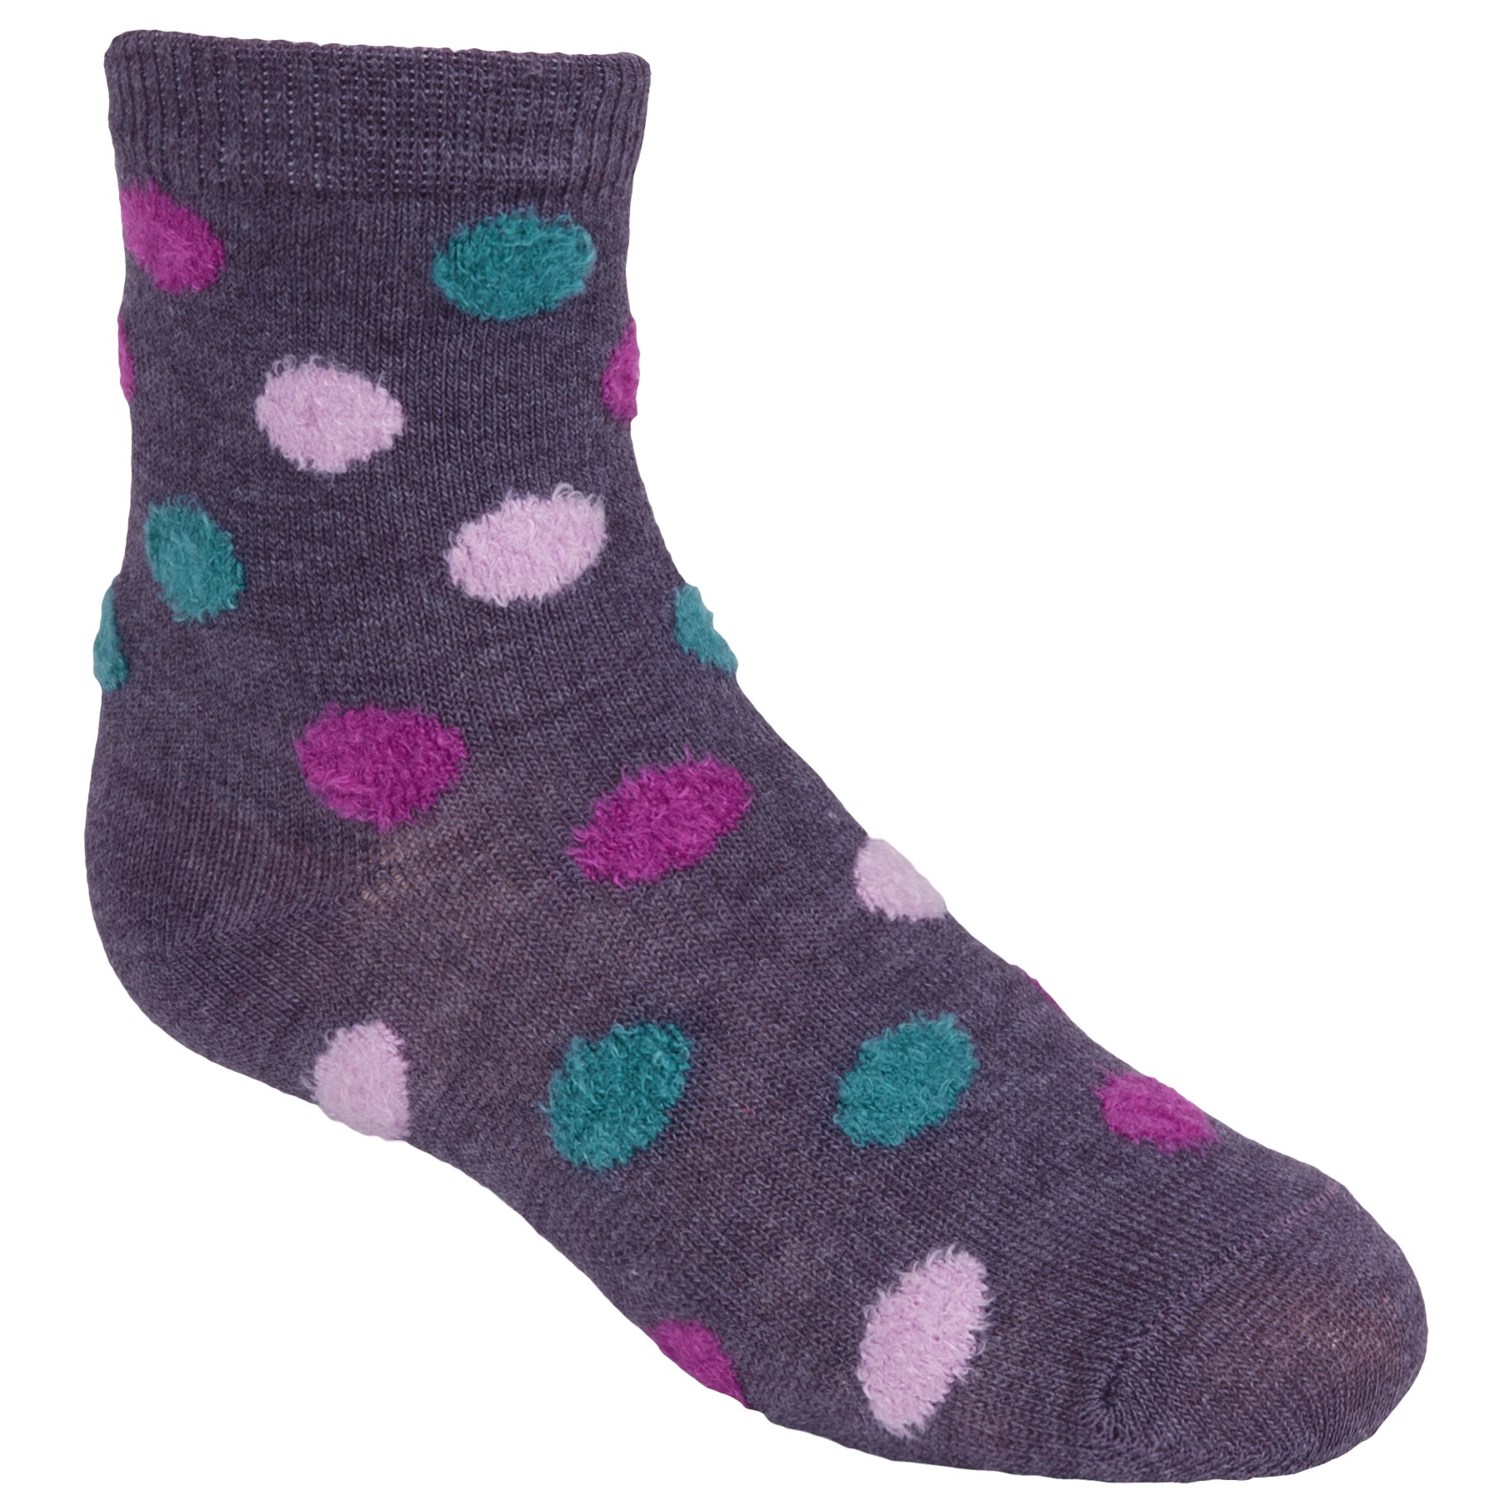 Country Kids Fuzzy Dot Socks (For Little Girls) 8995J - Save 75%